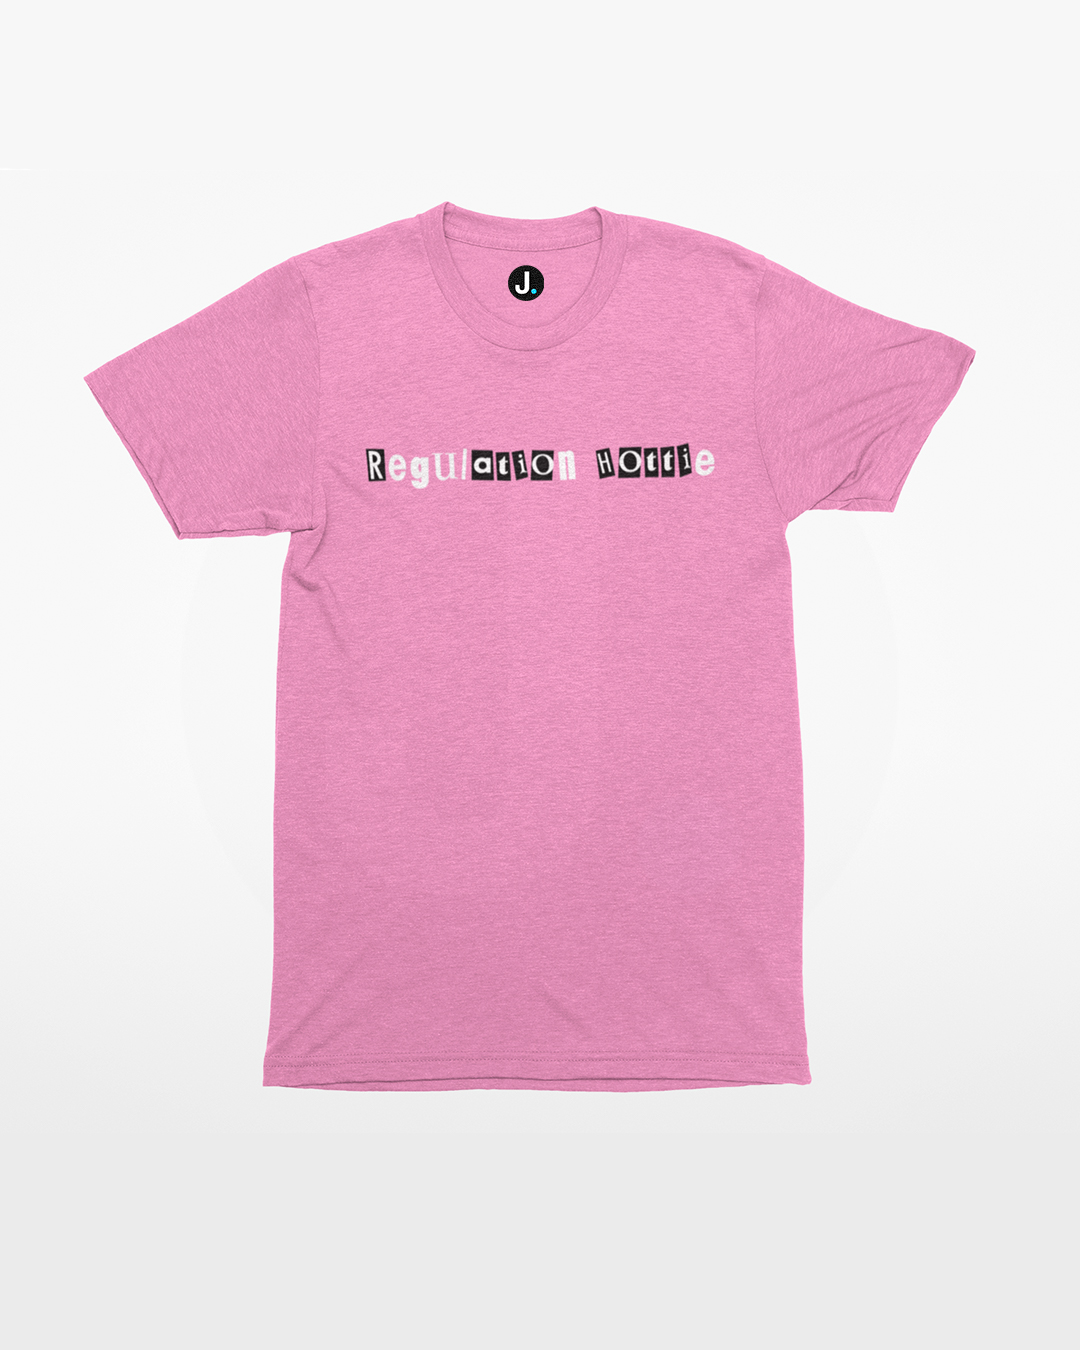 Regulation Hottie T-Shirt - Mean Girls Inspired T-Shirt - Cady Heron Mean Girls T-Shirt - Regulation Hottie Mean Girls Inspired T-Shirt